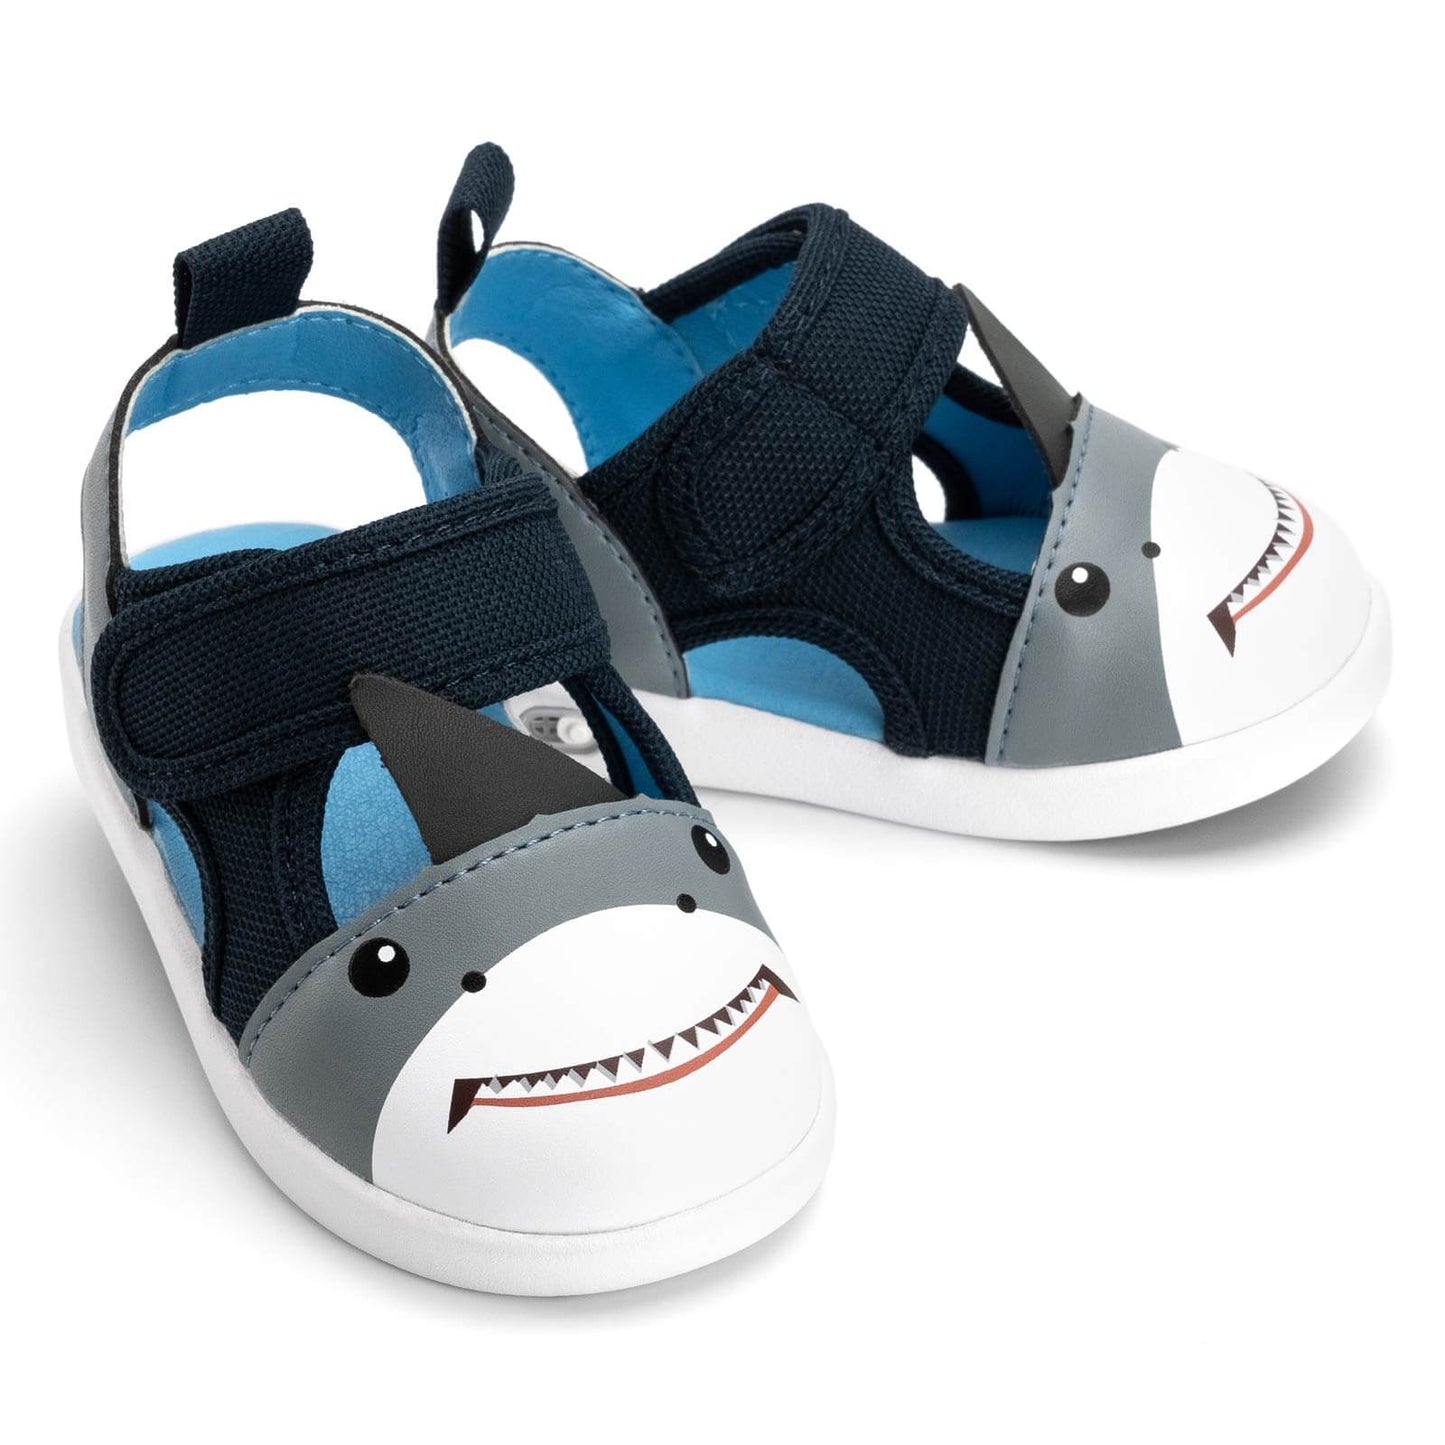 Barefoot kid's sandals - JANU - MARINE